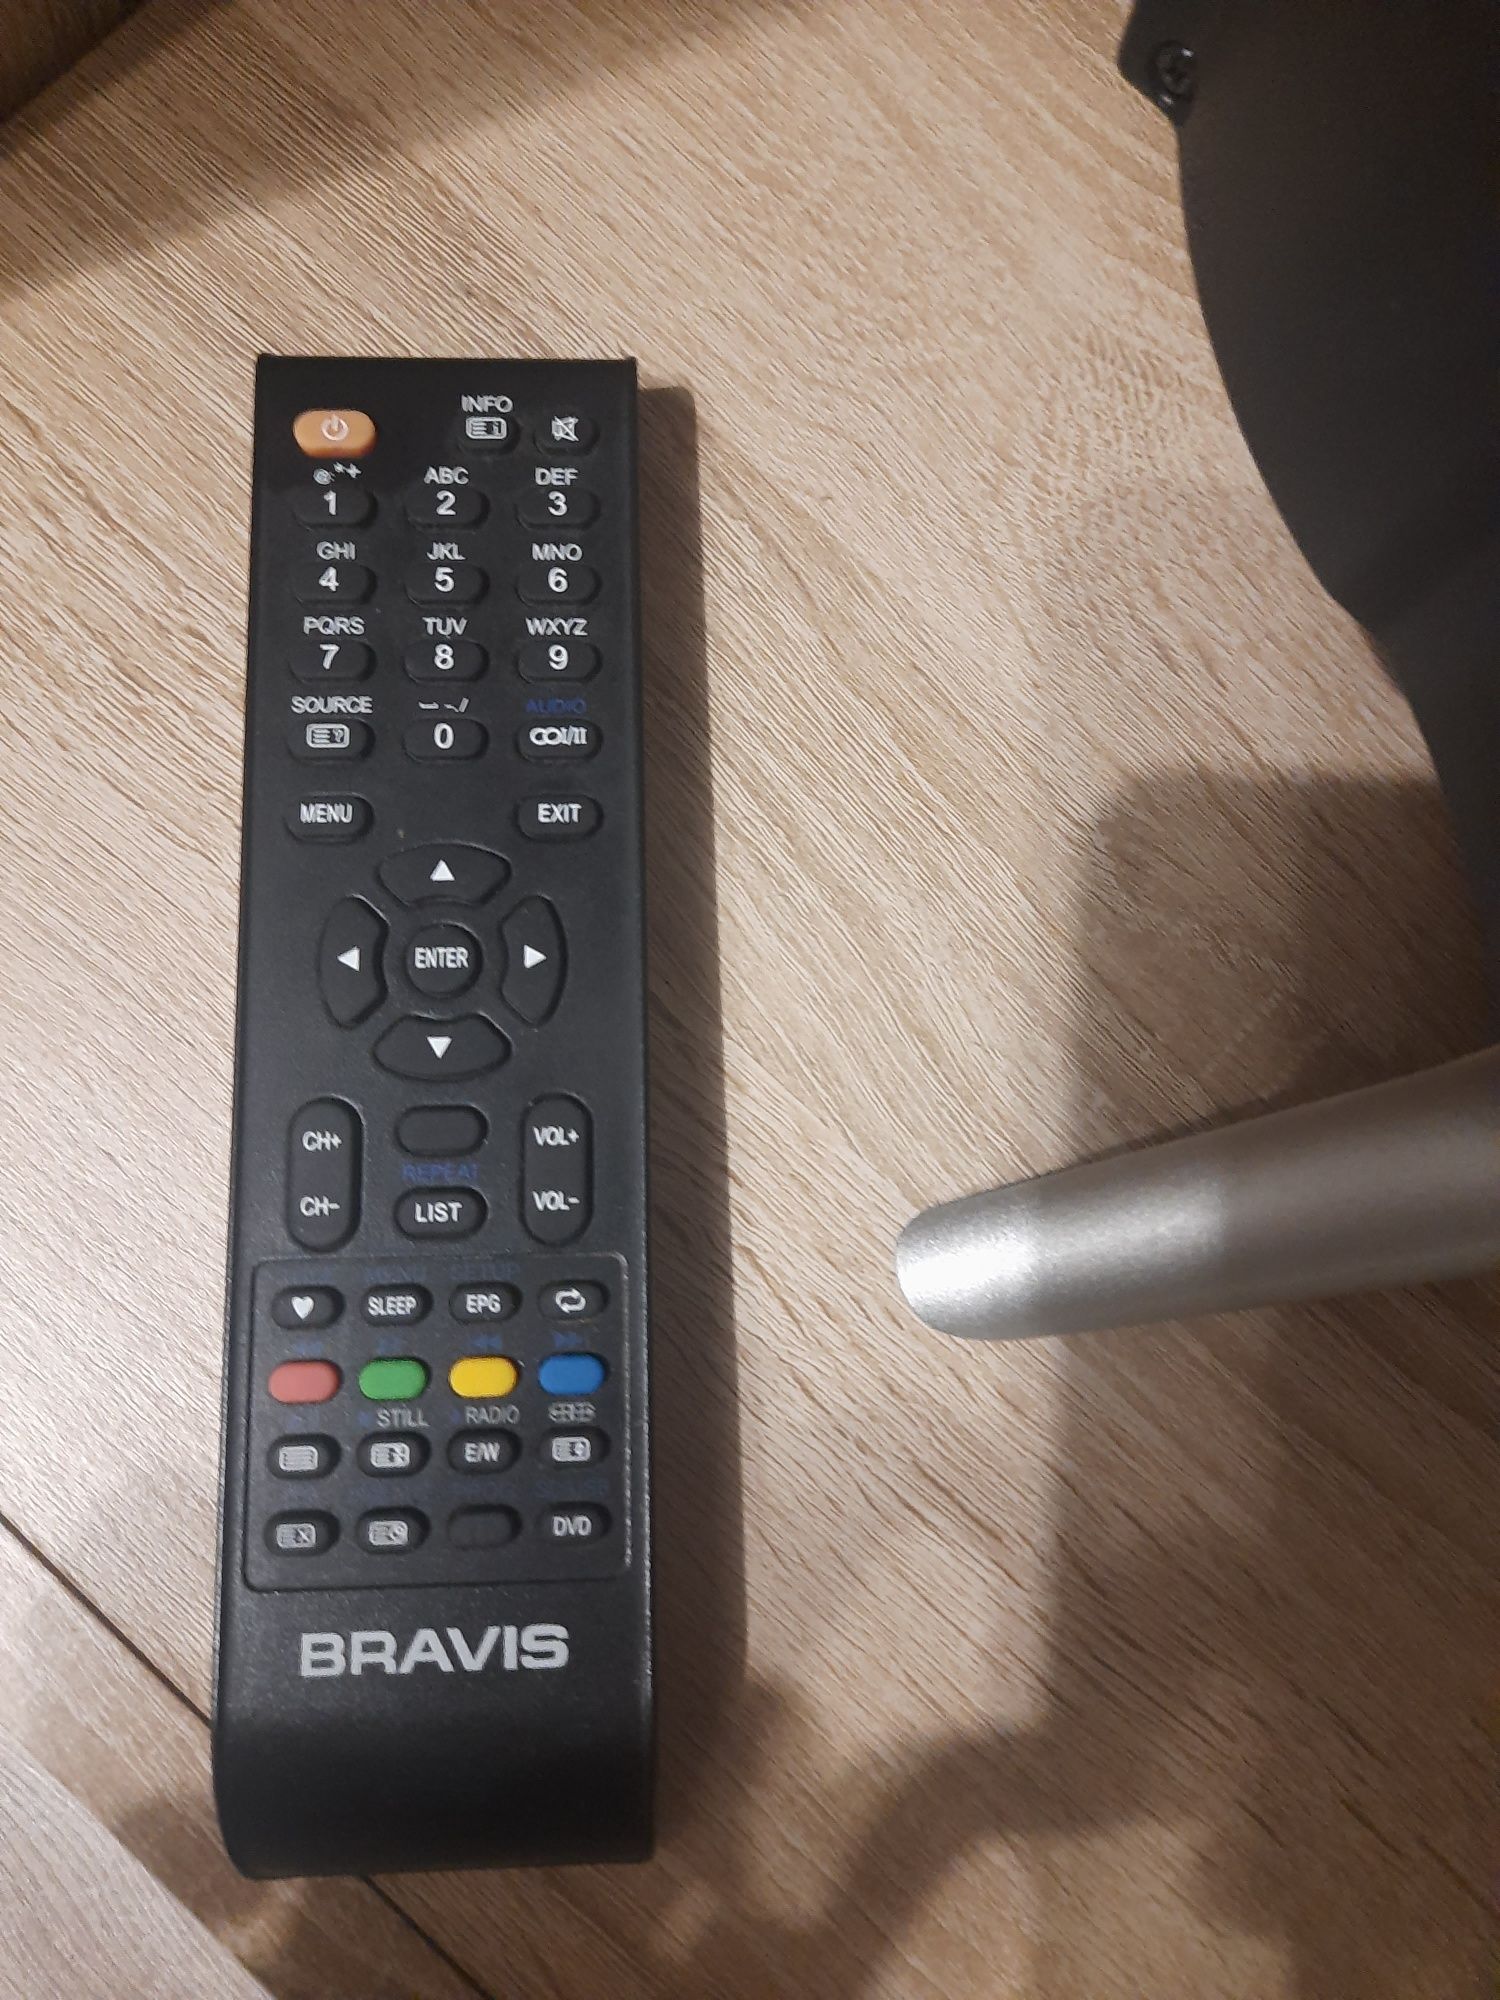 Телевізор Bravis LED-39D2000 Black